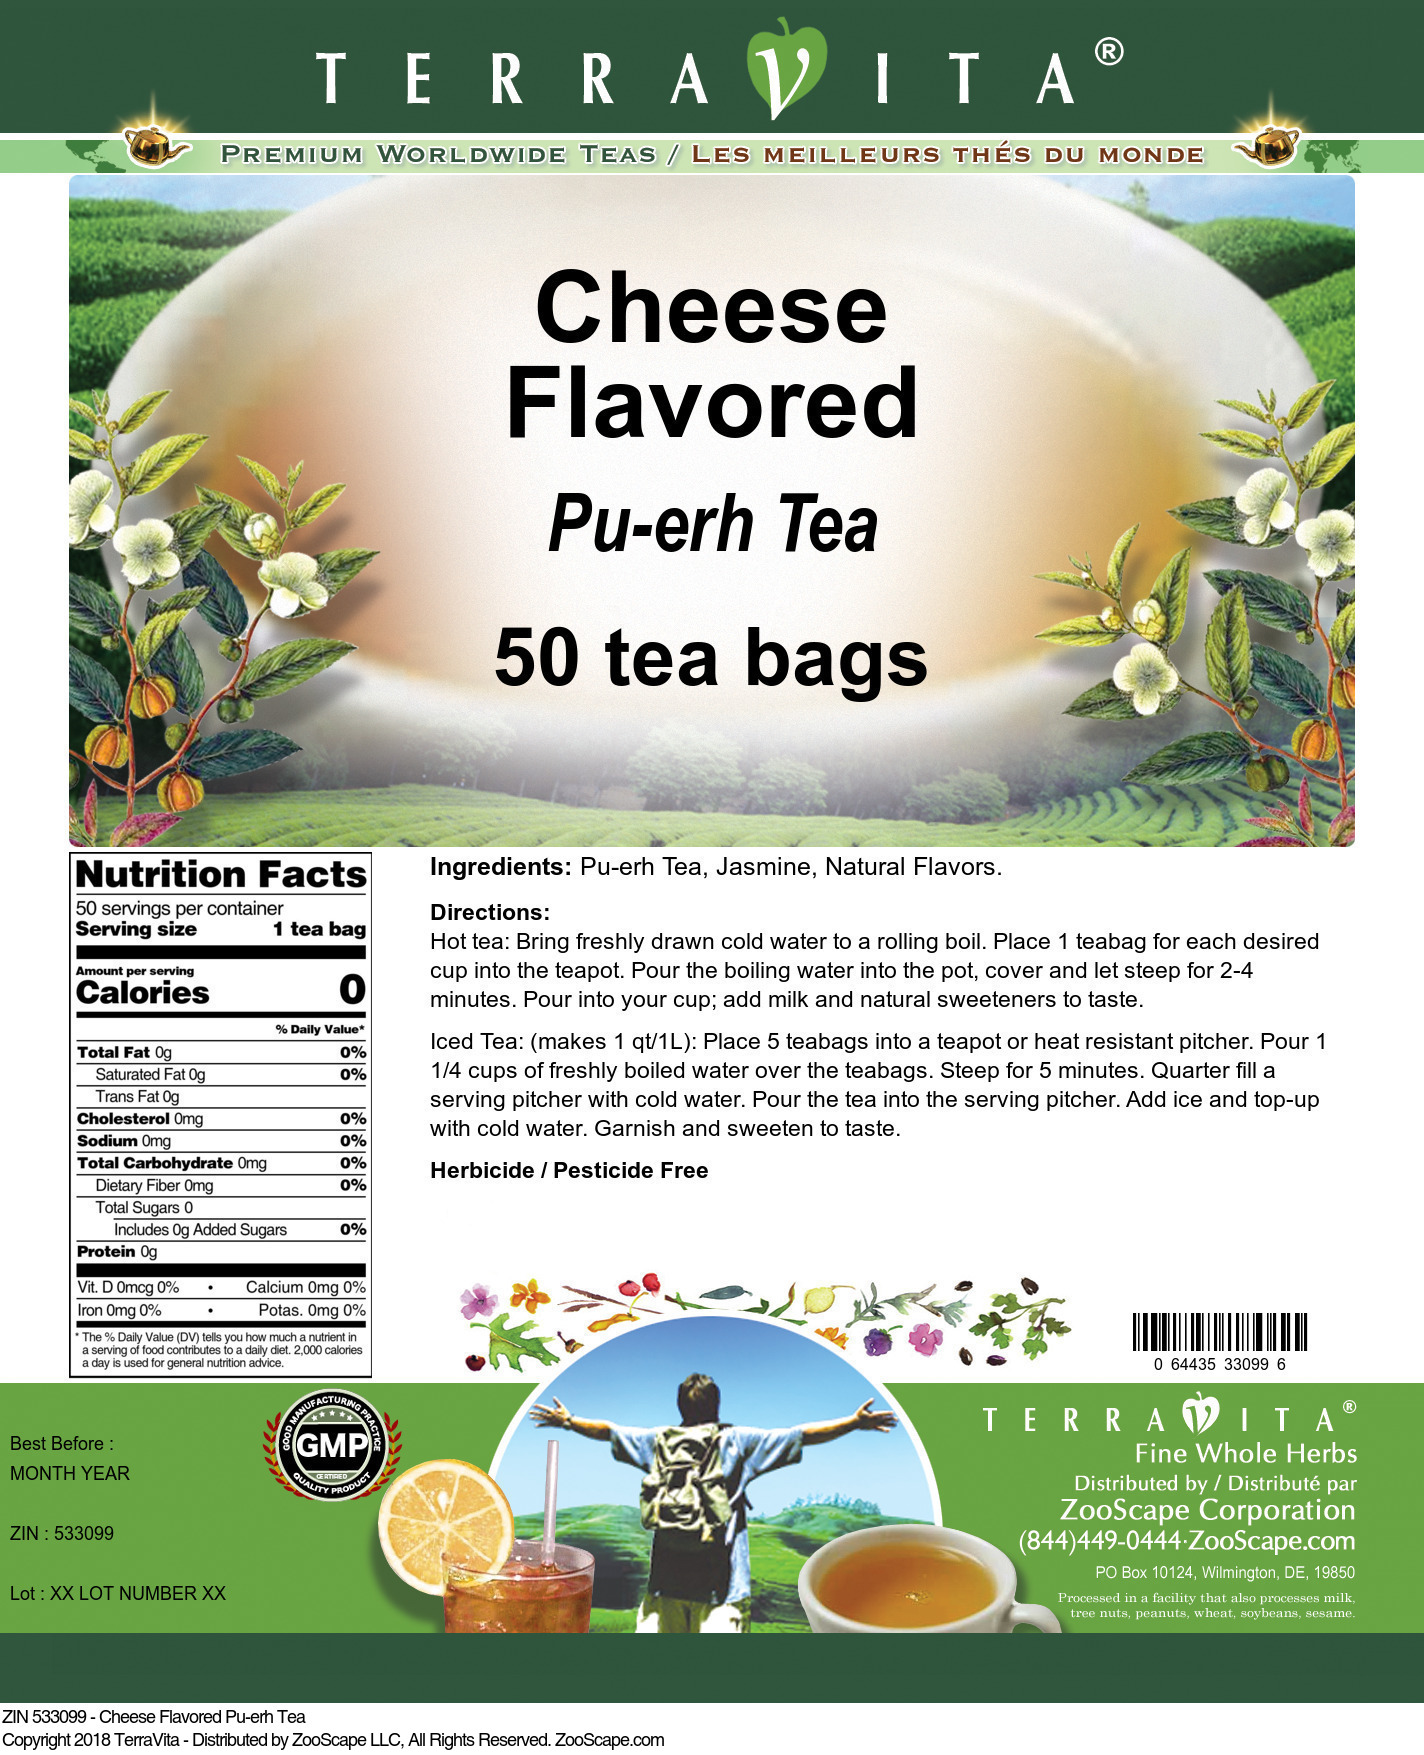 Cheese Flavored Pu-erh Tea - Label